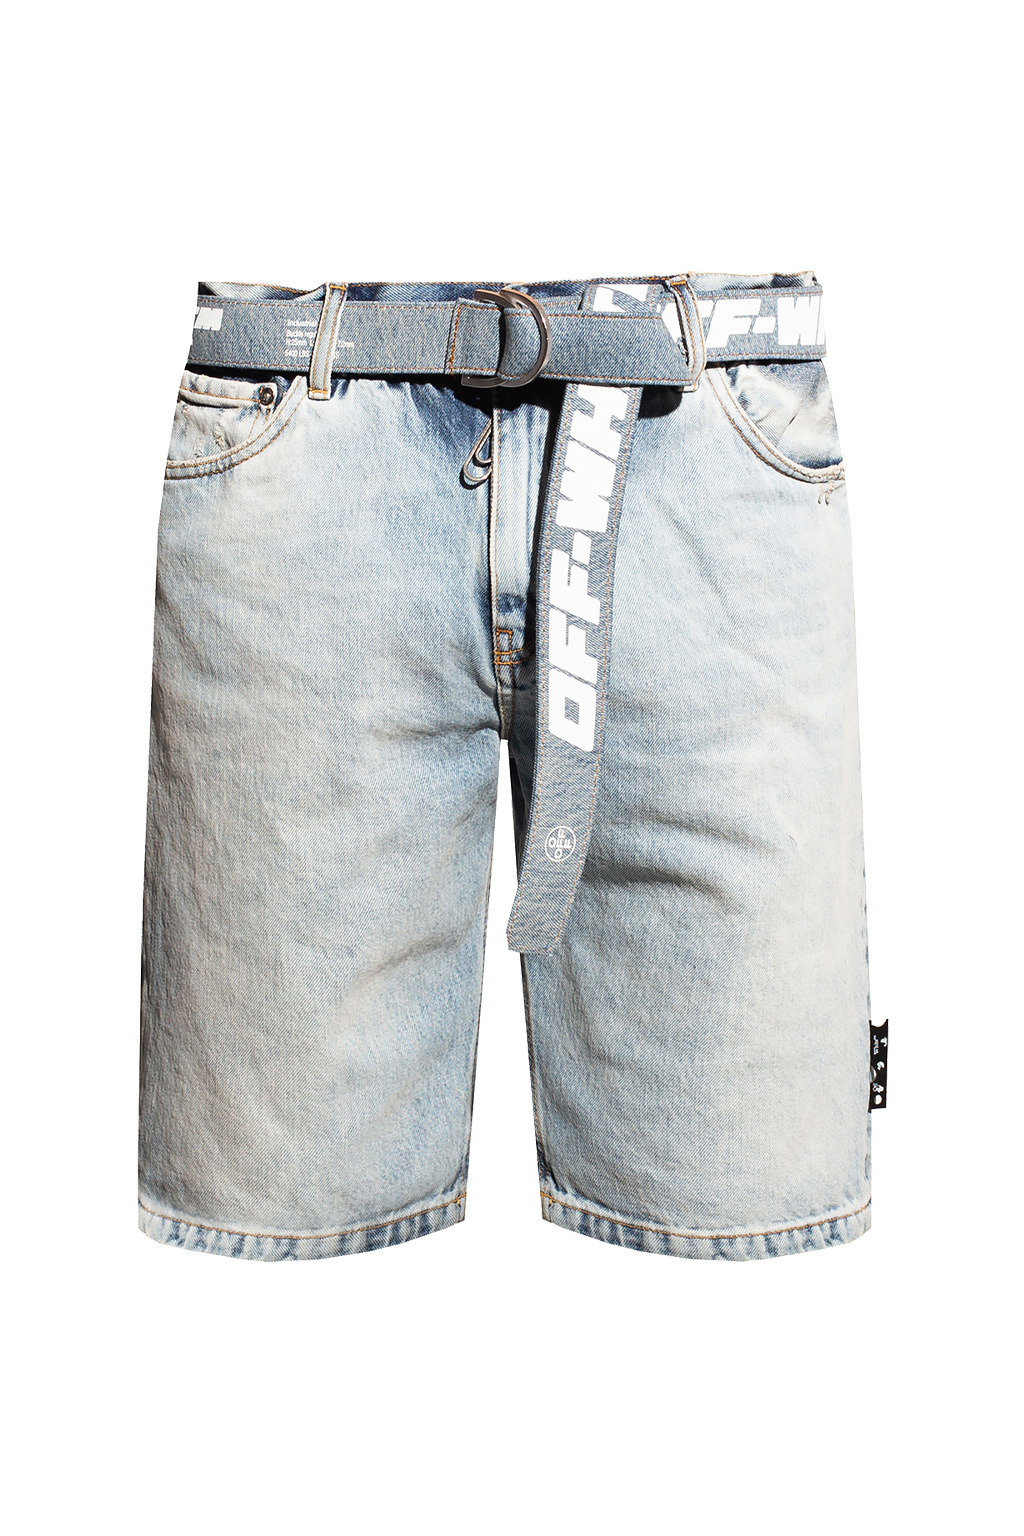 Afloat-Dismal Denim shorts | Men's Clothing | IetpShops